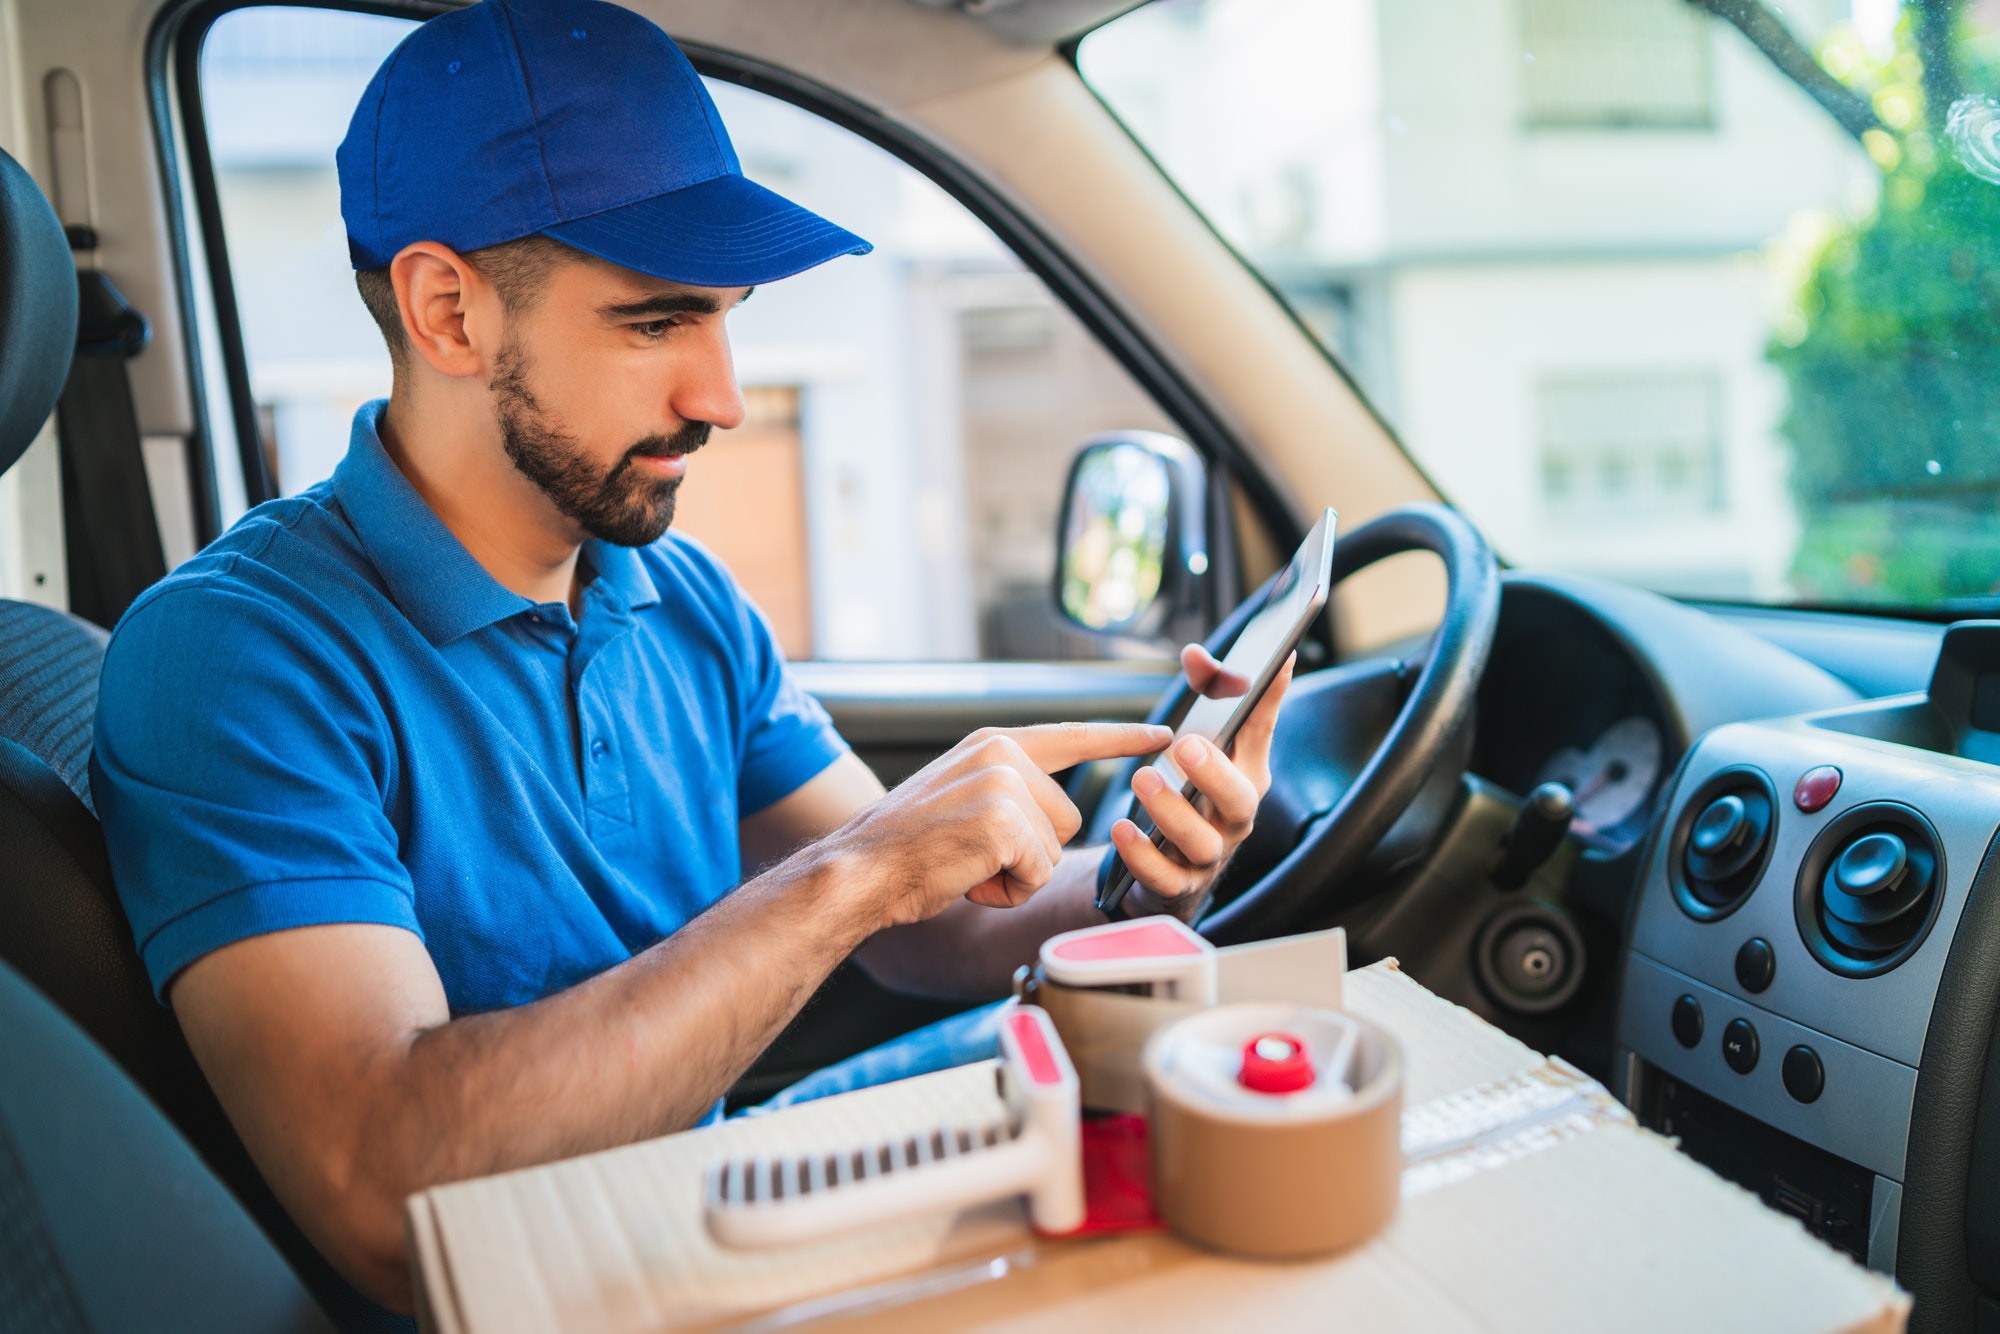 Delivery man driver using digital tablet.